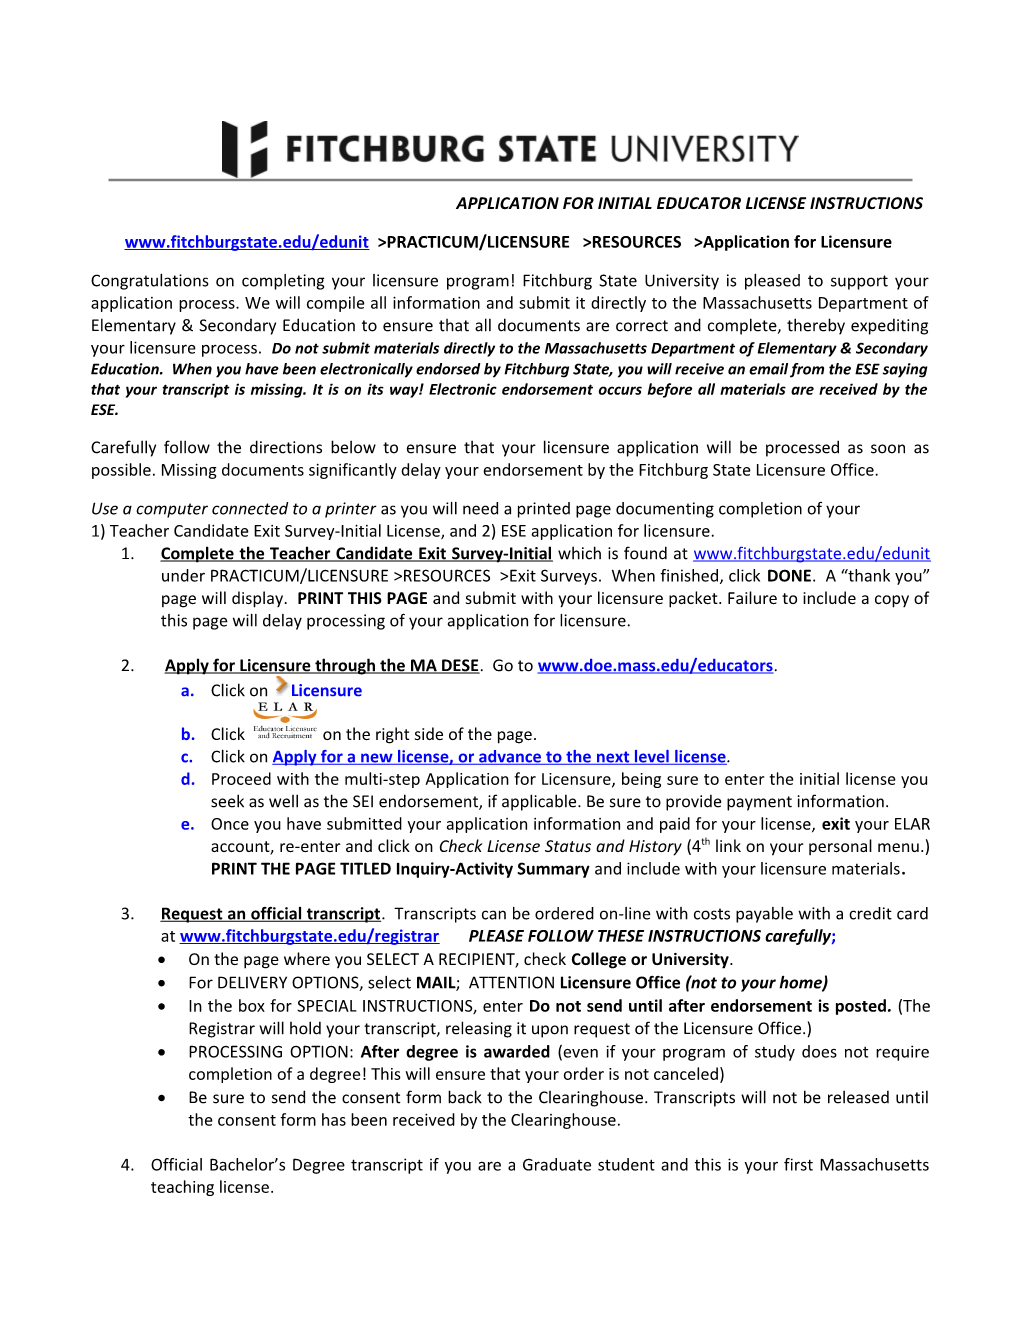 Undergraduate Licensure Application Instructions